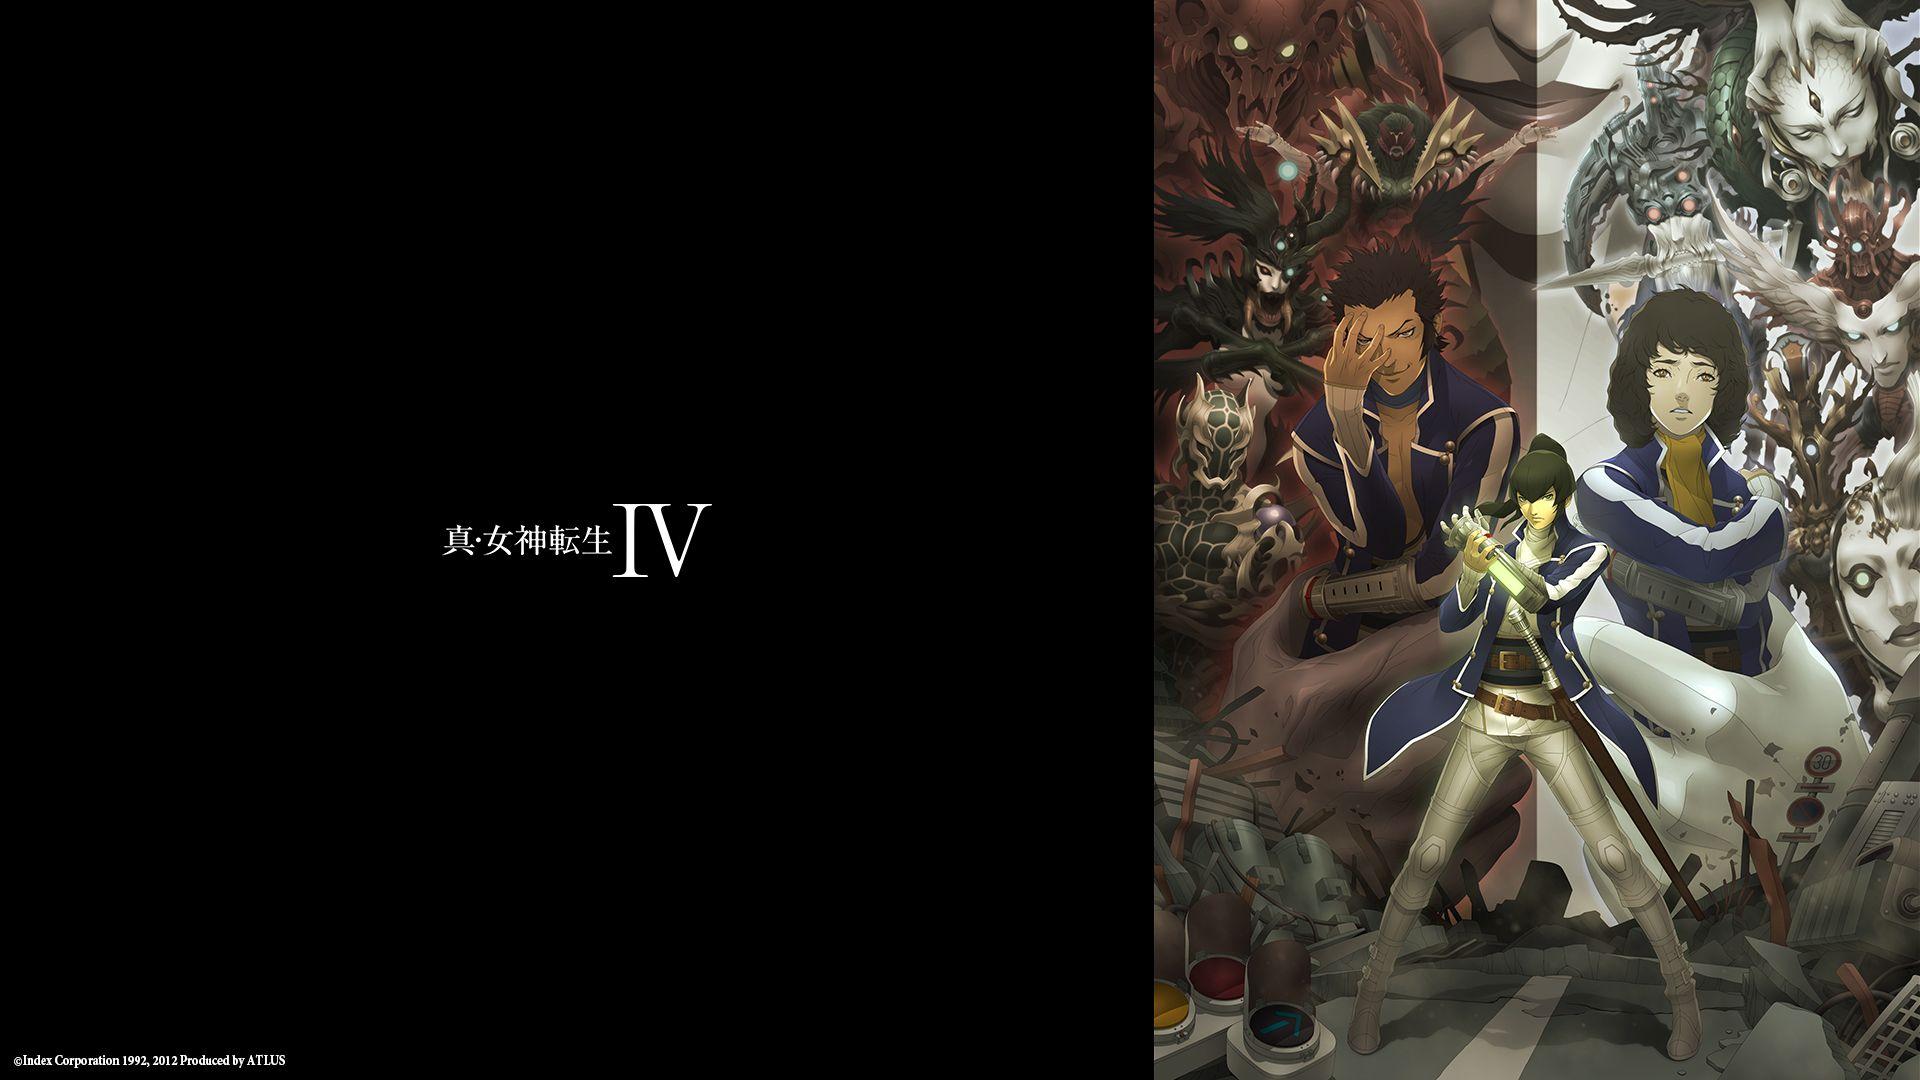 Shin Megami Tensei Wallpapers Top Free Shin Megami Tensei Images, Photos, Reviews